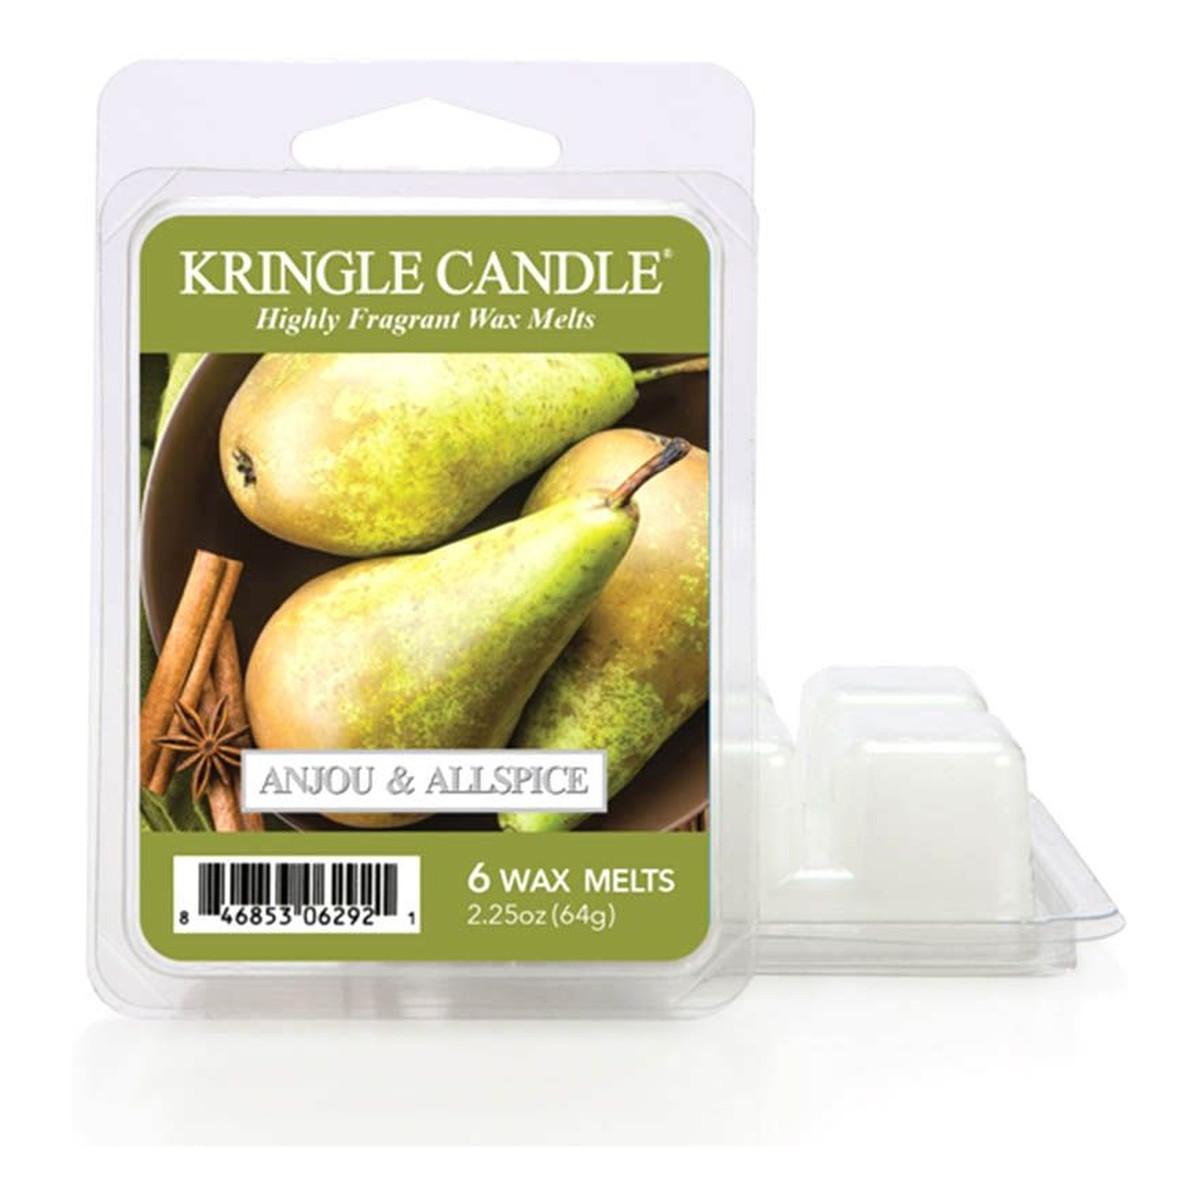 Kringle Candle Wax wosk zapachowy "potpourri" anjou & allspice 64g